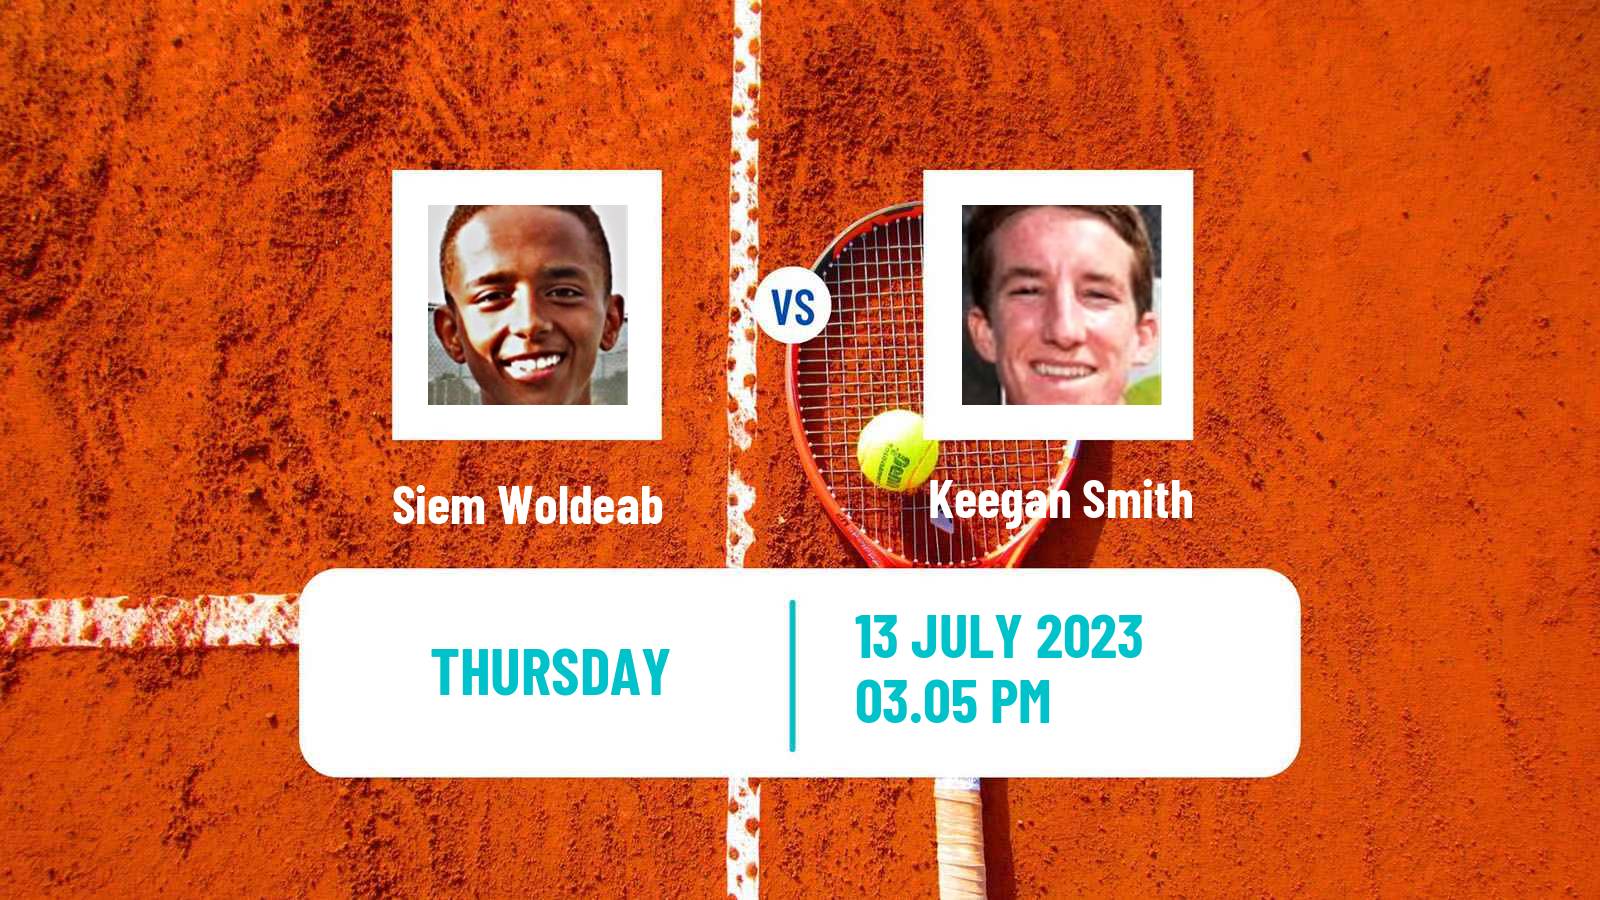 Tennis ITF M15 Lakewood Ca 2 Men Siem Woldeab - Keegan Smith